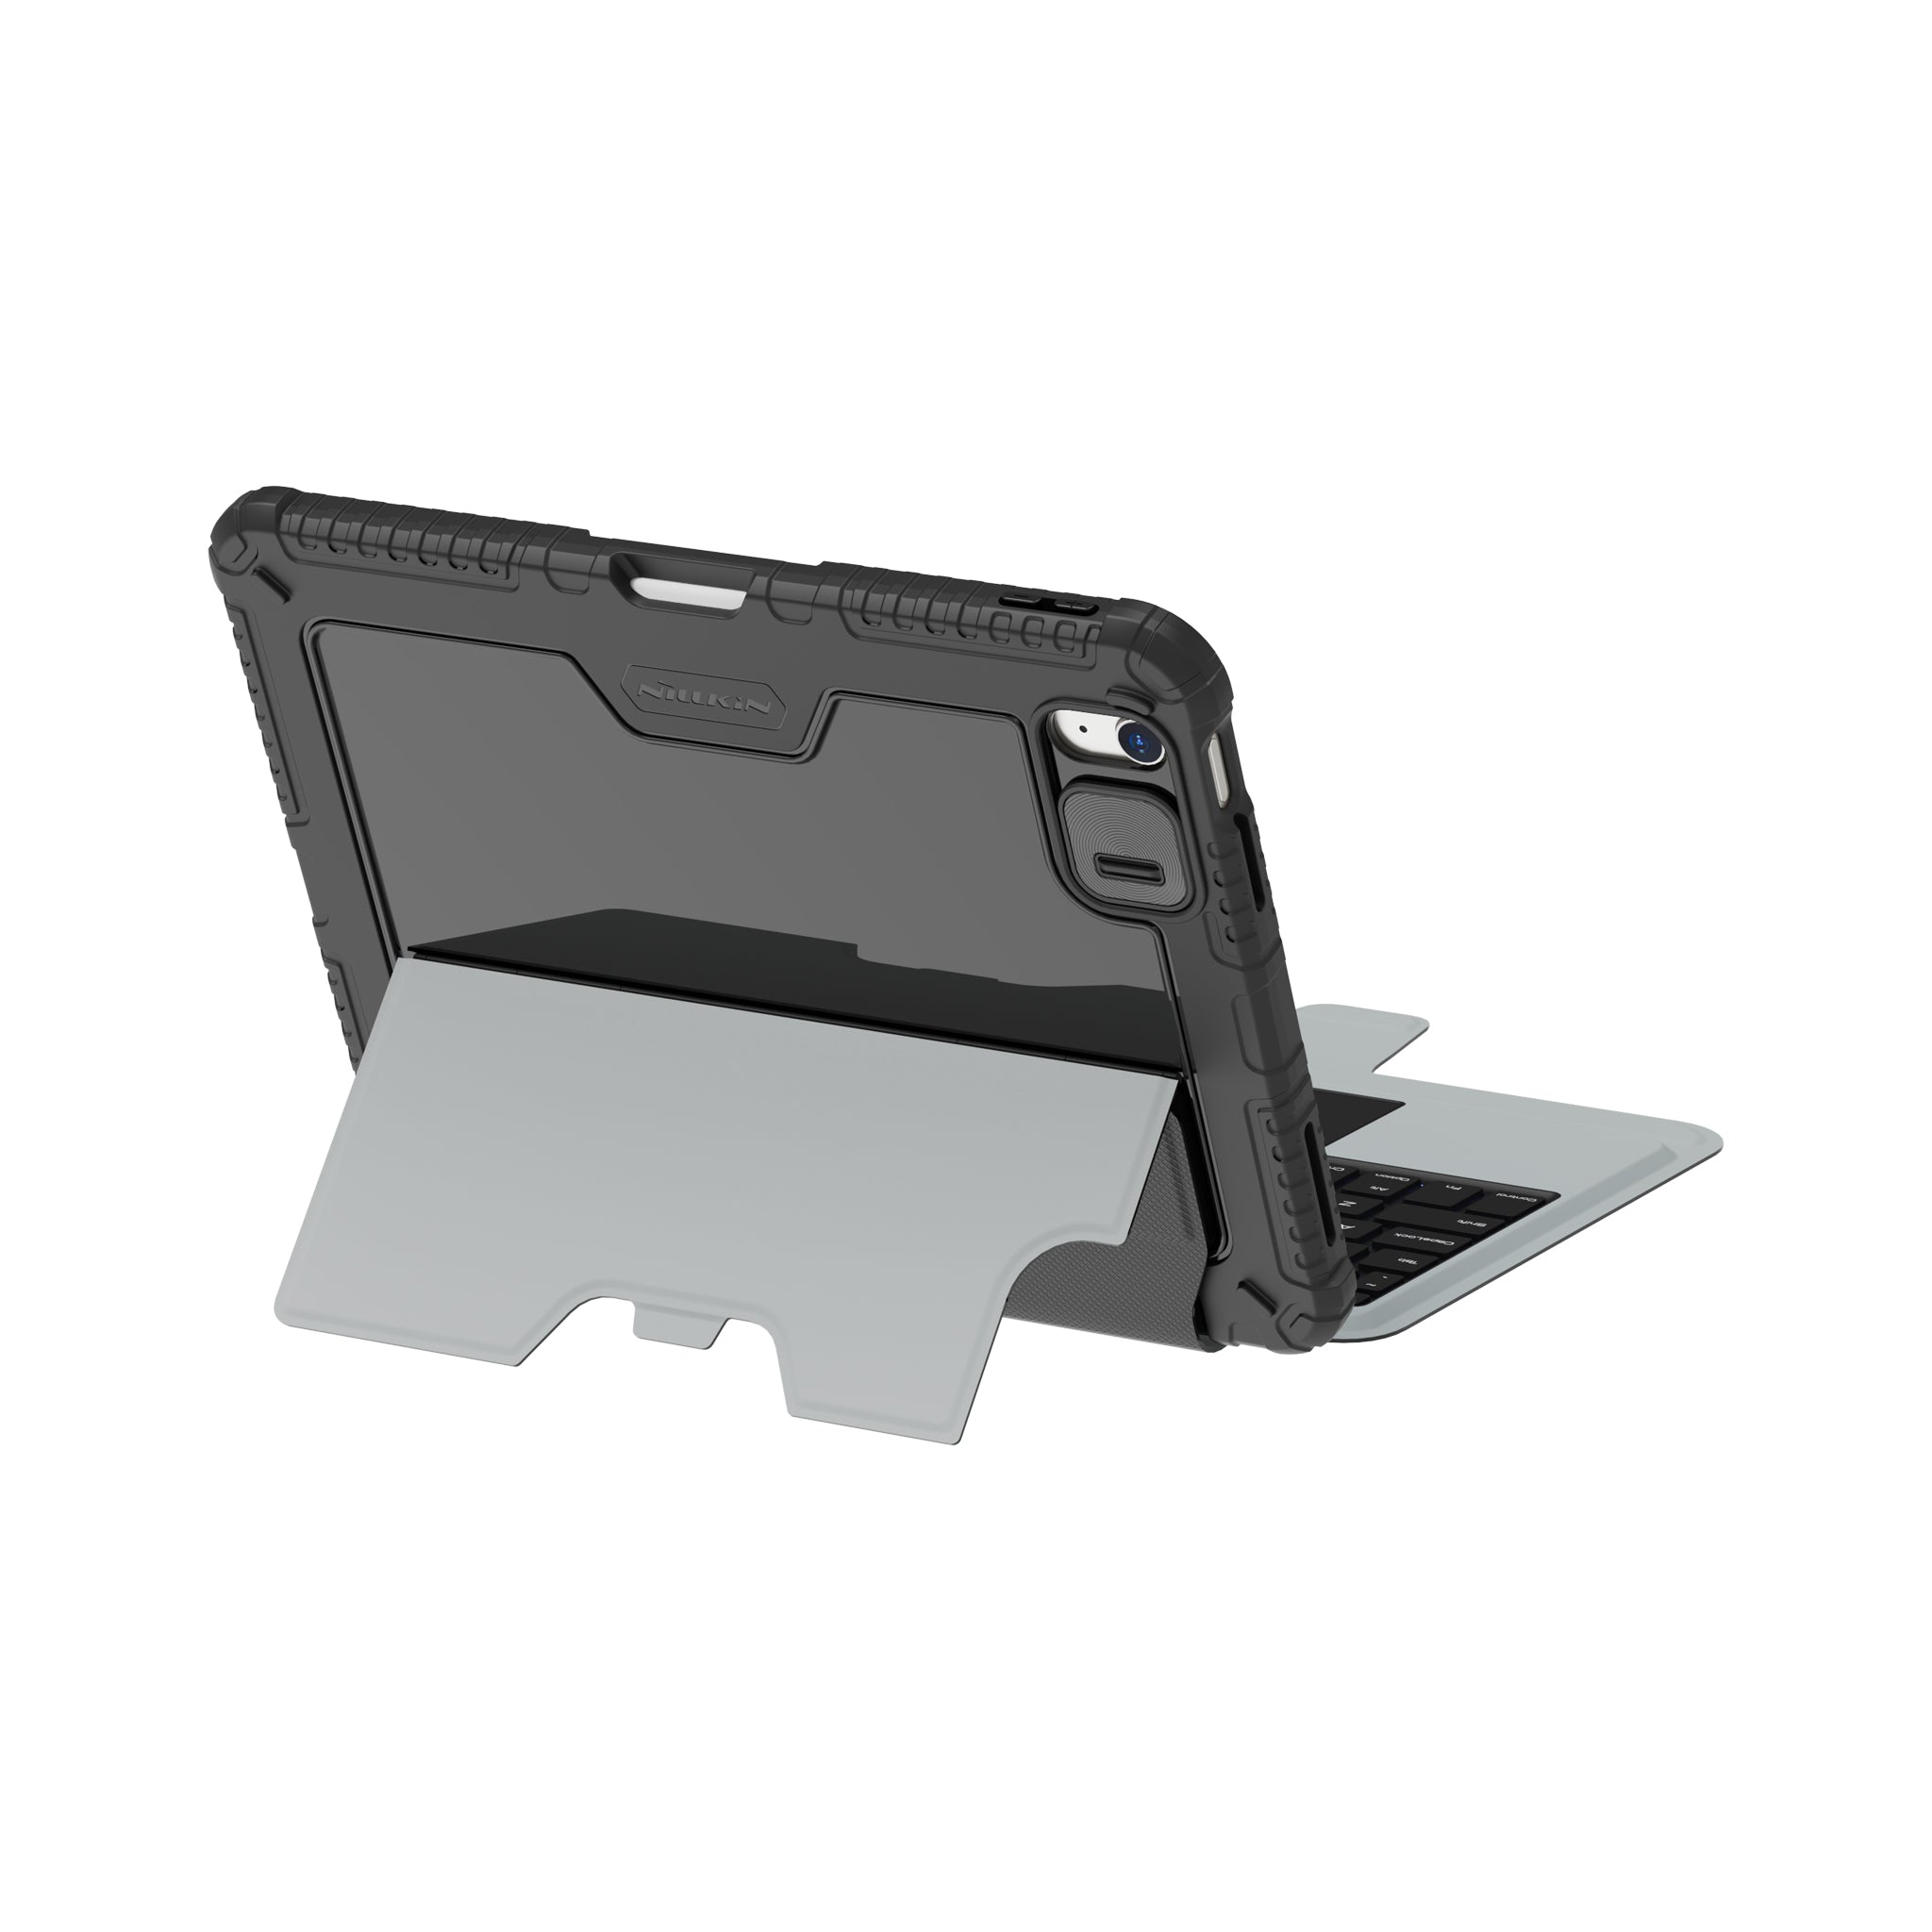 TabletACE Keyboard (Backlit Version) Case for iPad Series